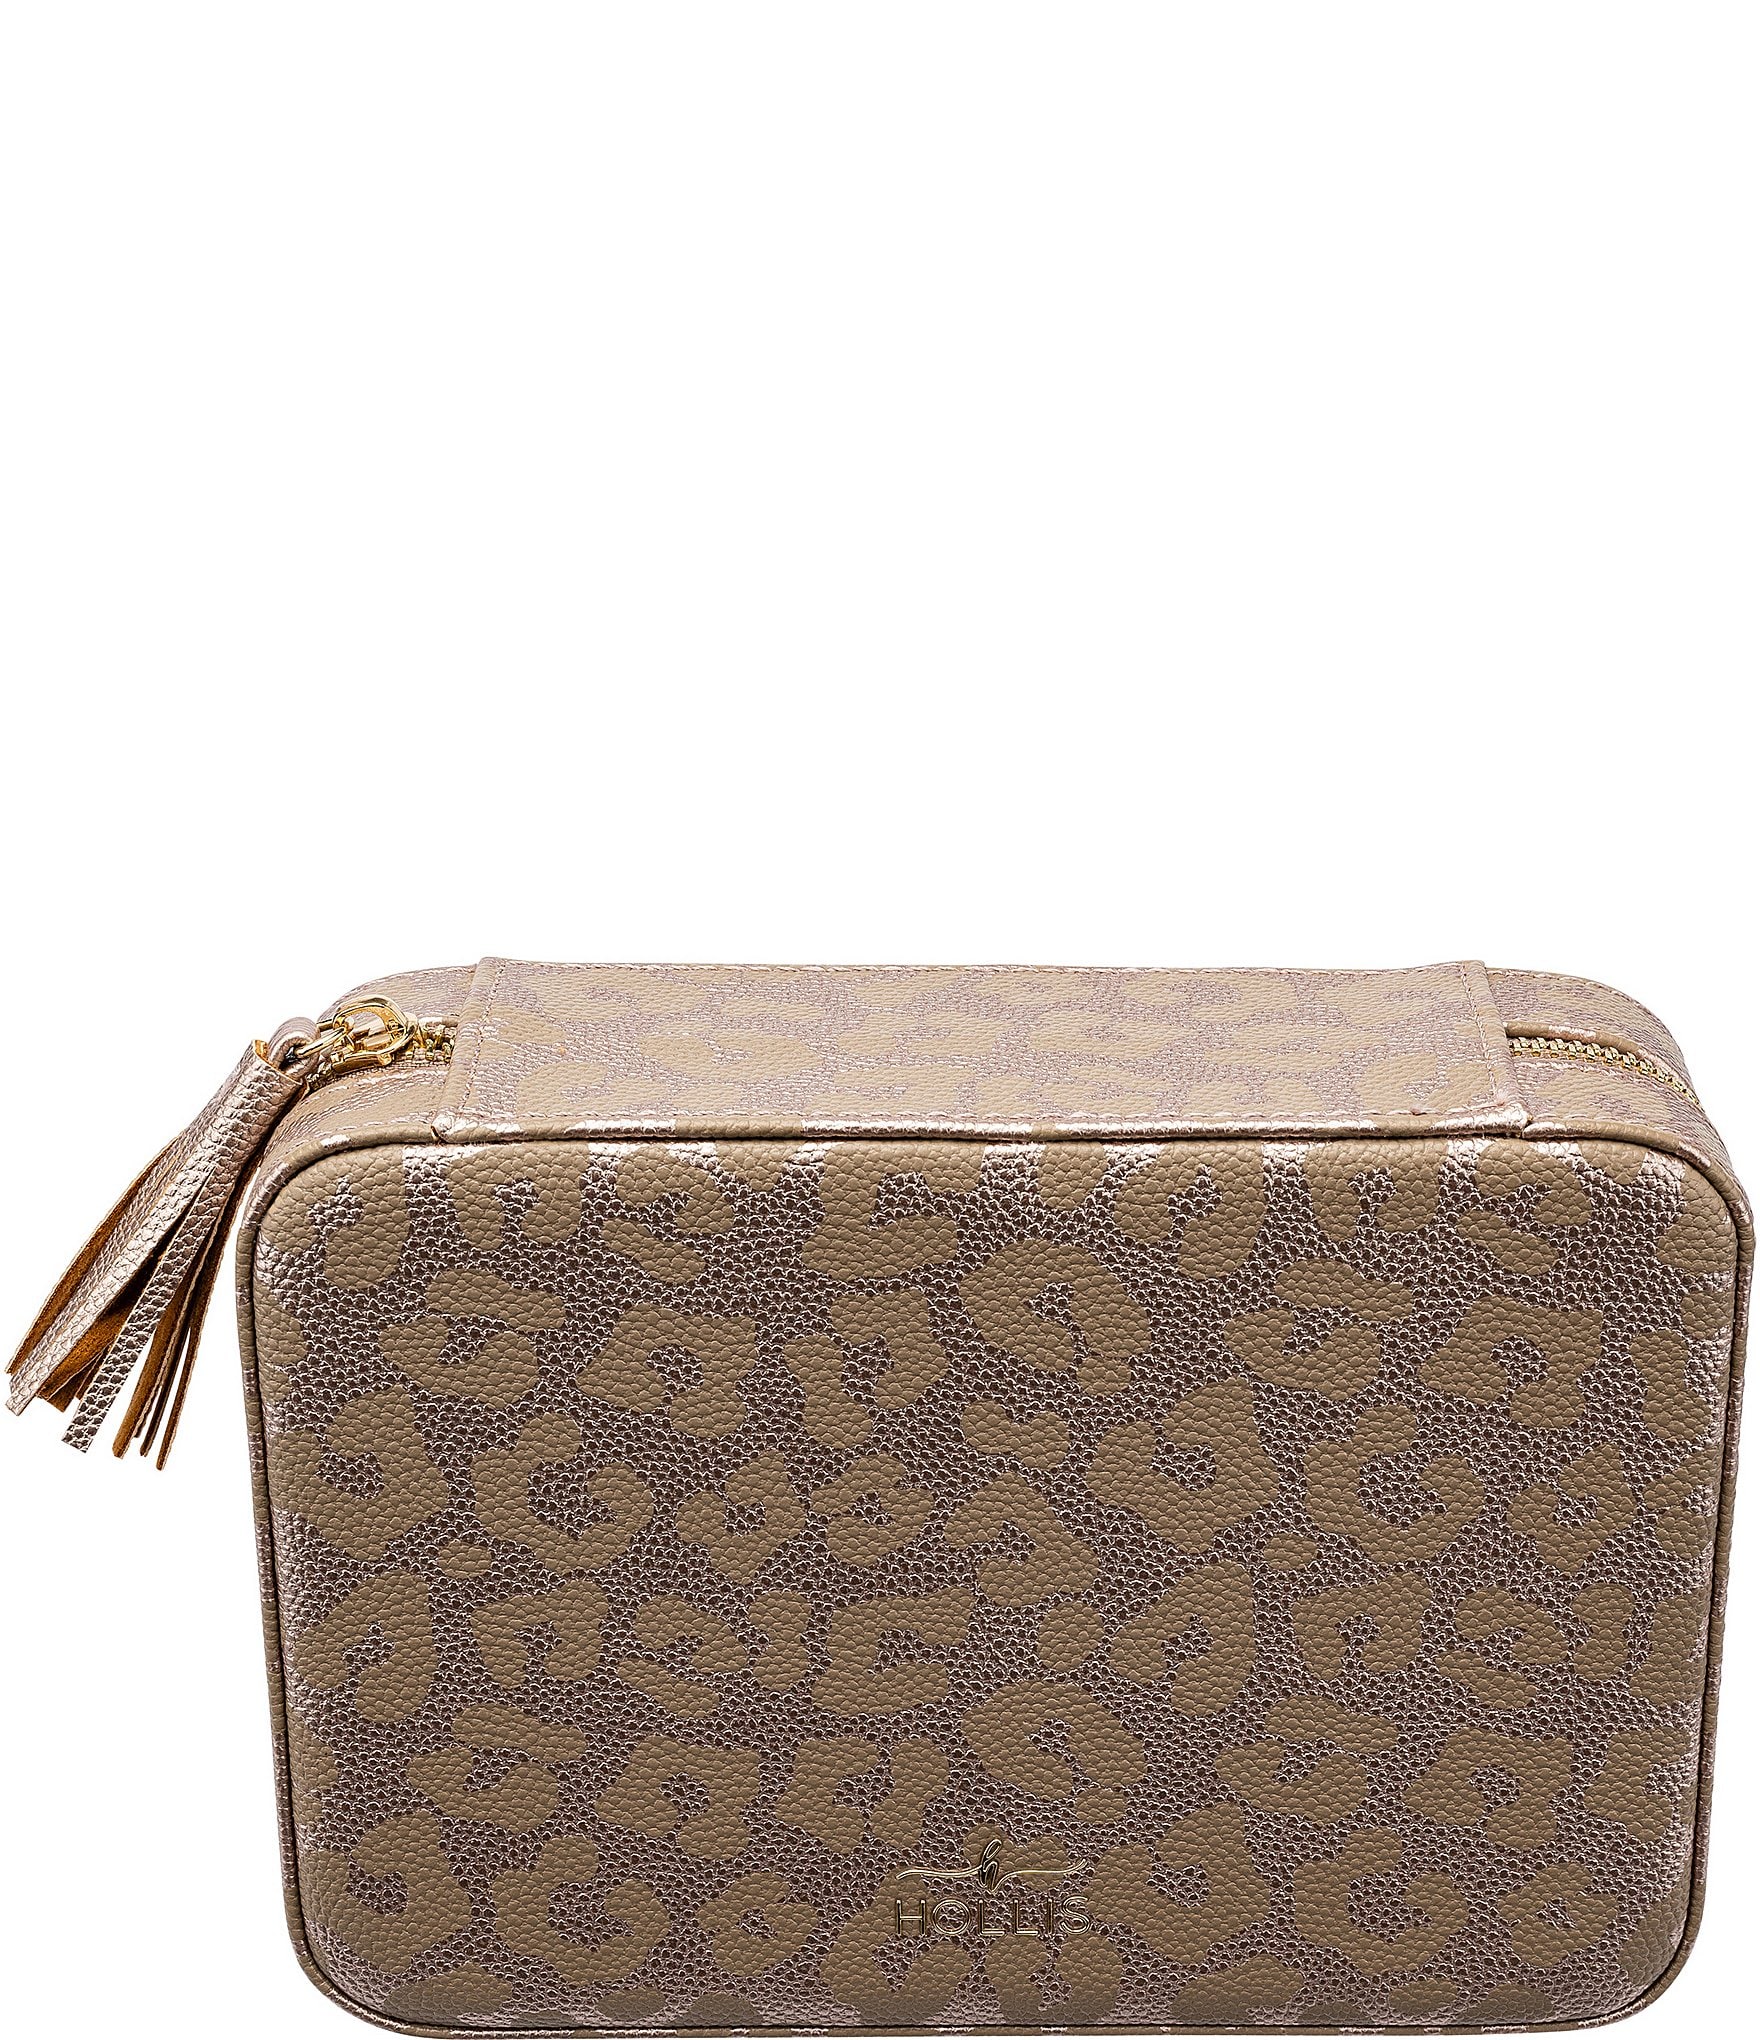 HOLLIS x Dillard's Champagne Leopard Vegan Leather Lux Weekender Bag